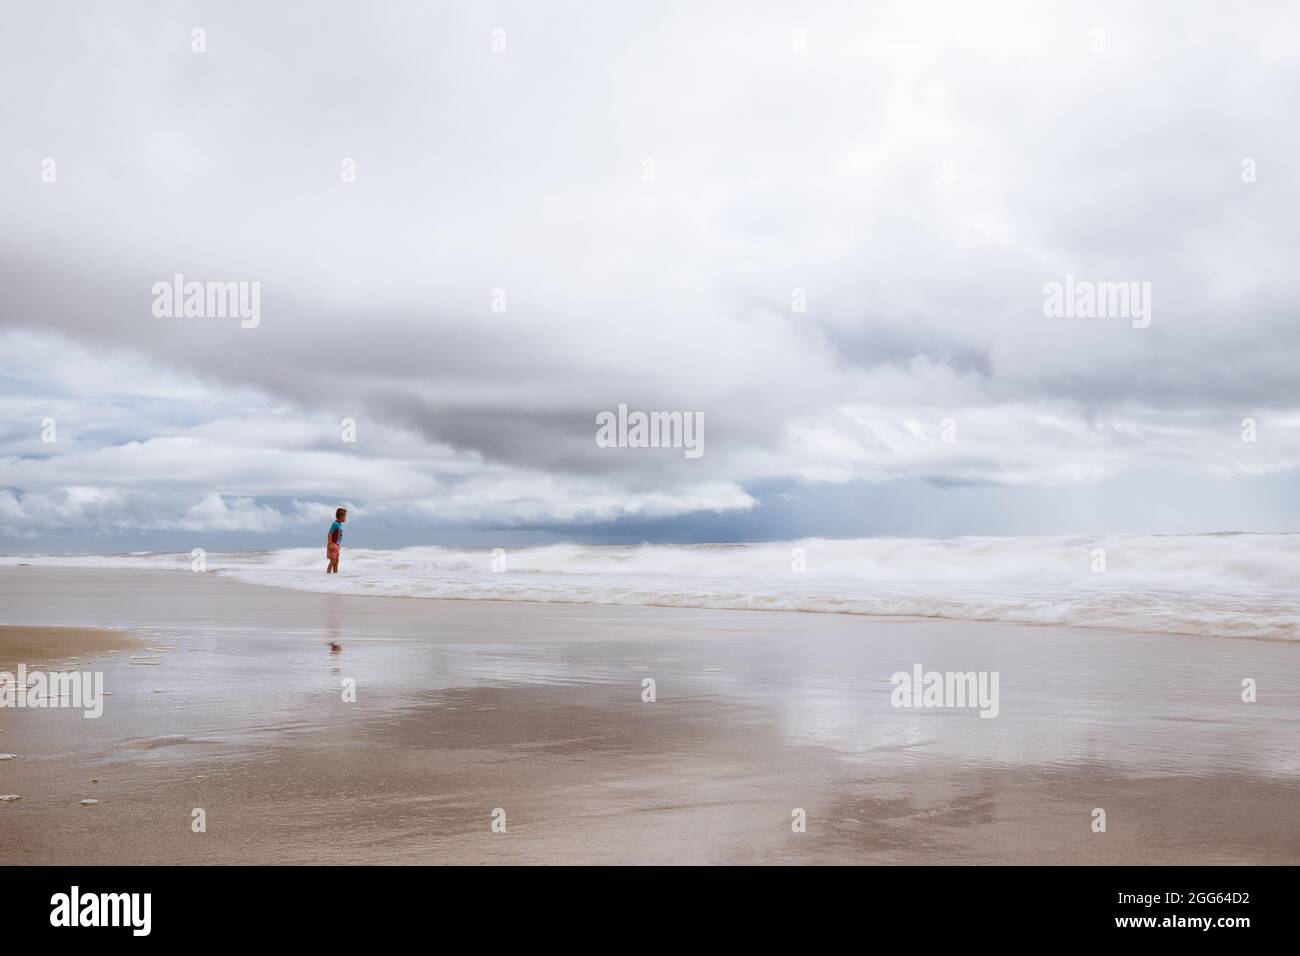 A boy stands in the water in Carolina Beach, North Carolina. Stock Photo